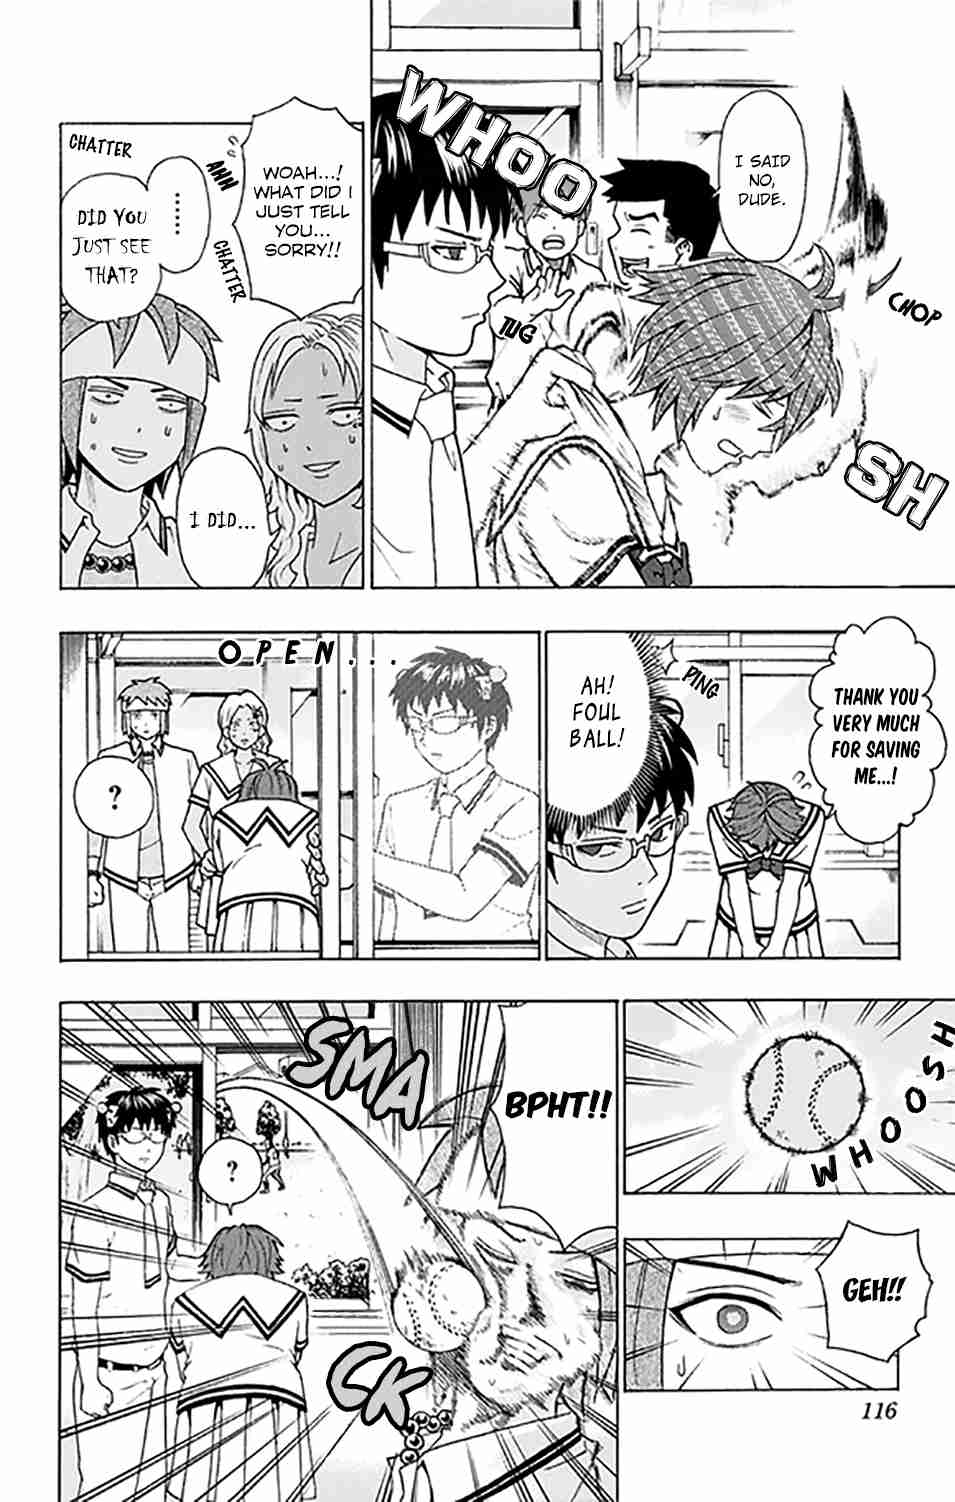 Saiki Kusuo no PSI Nan Vol. 24 Ch. 258 Terrifying! A DiPSIstrous Transfer Student Appears! (Second Half)